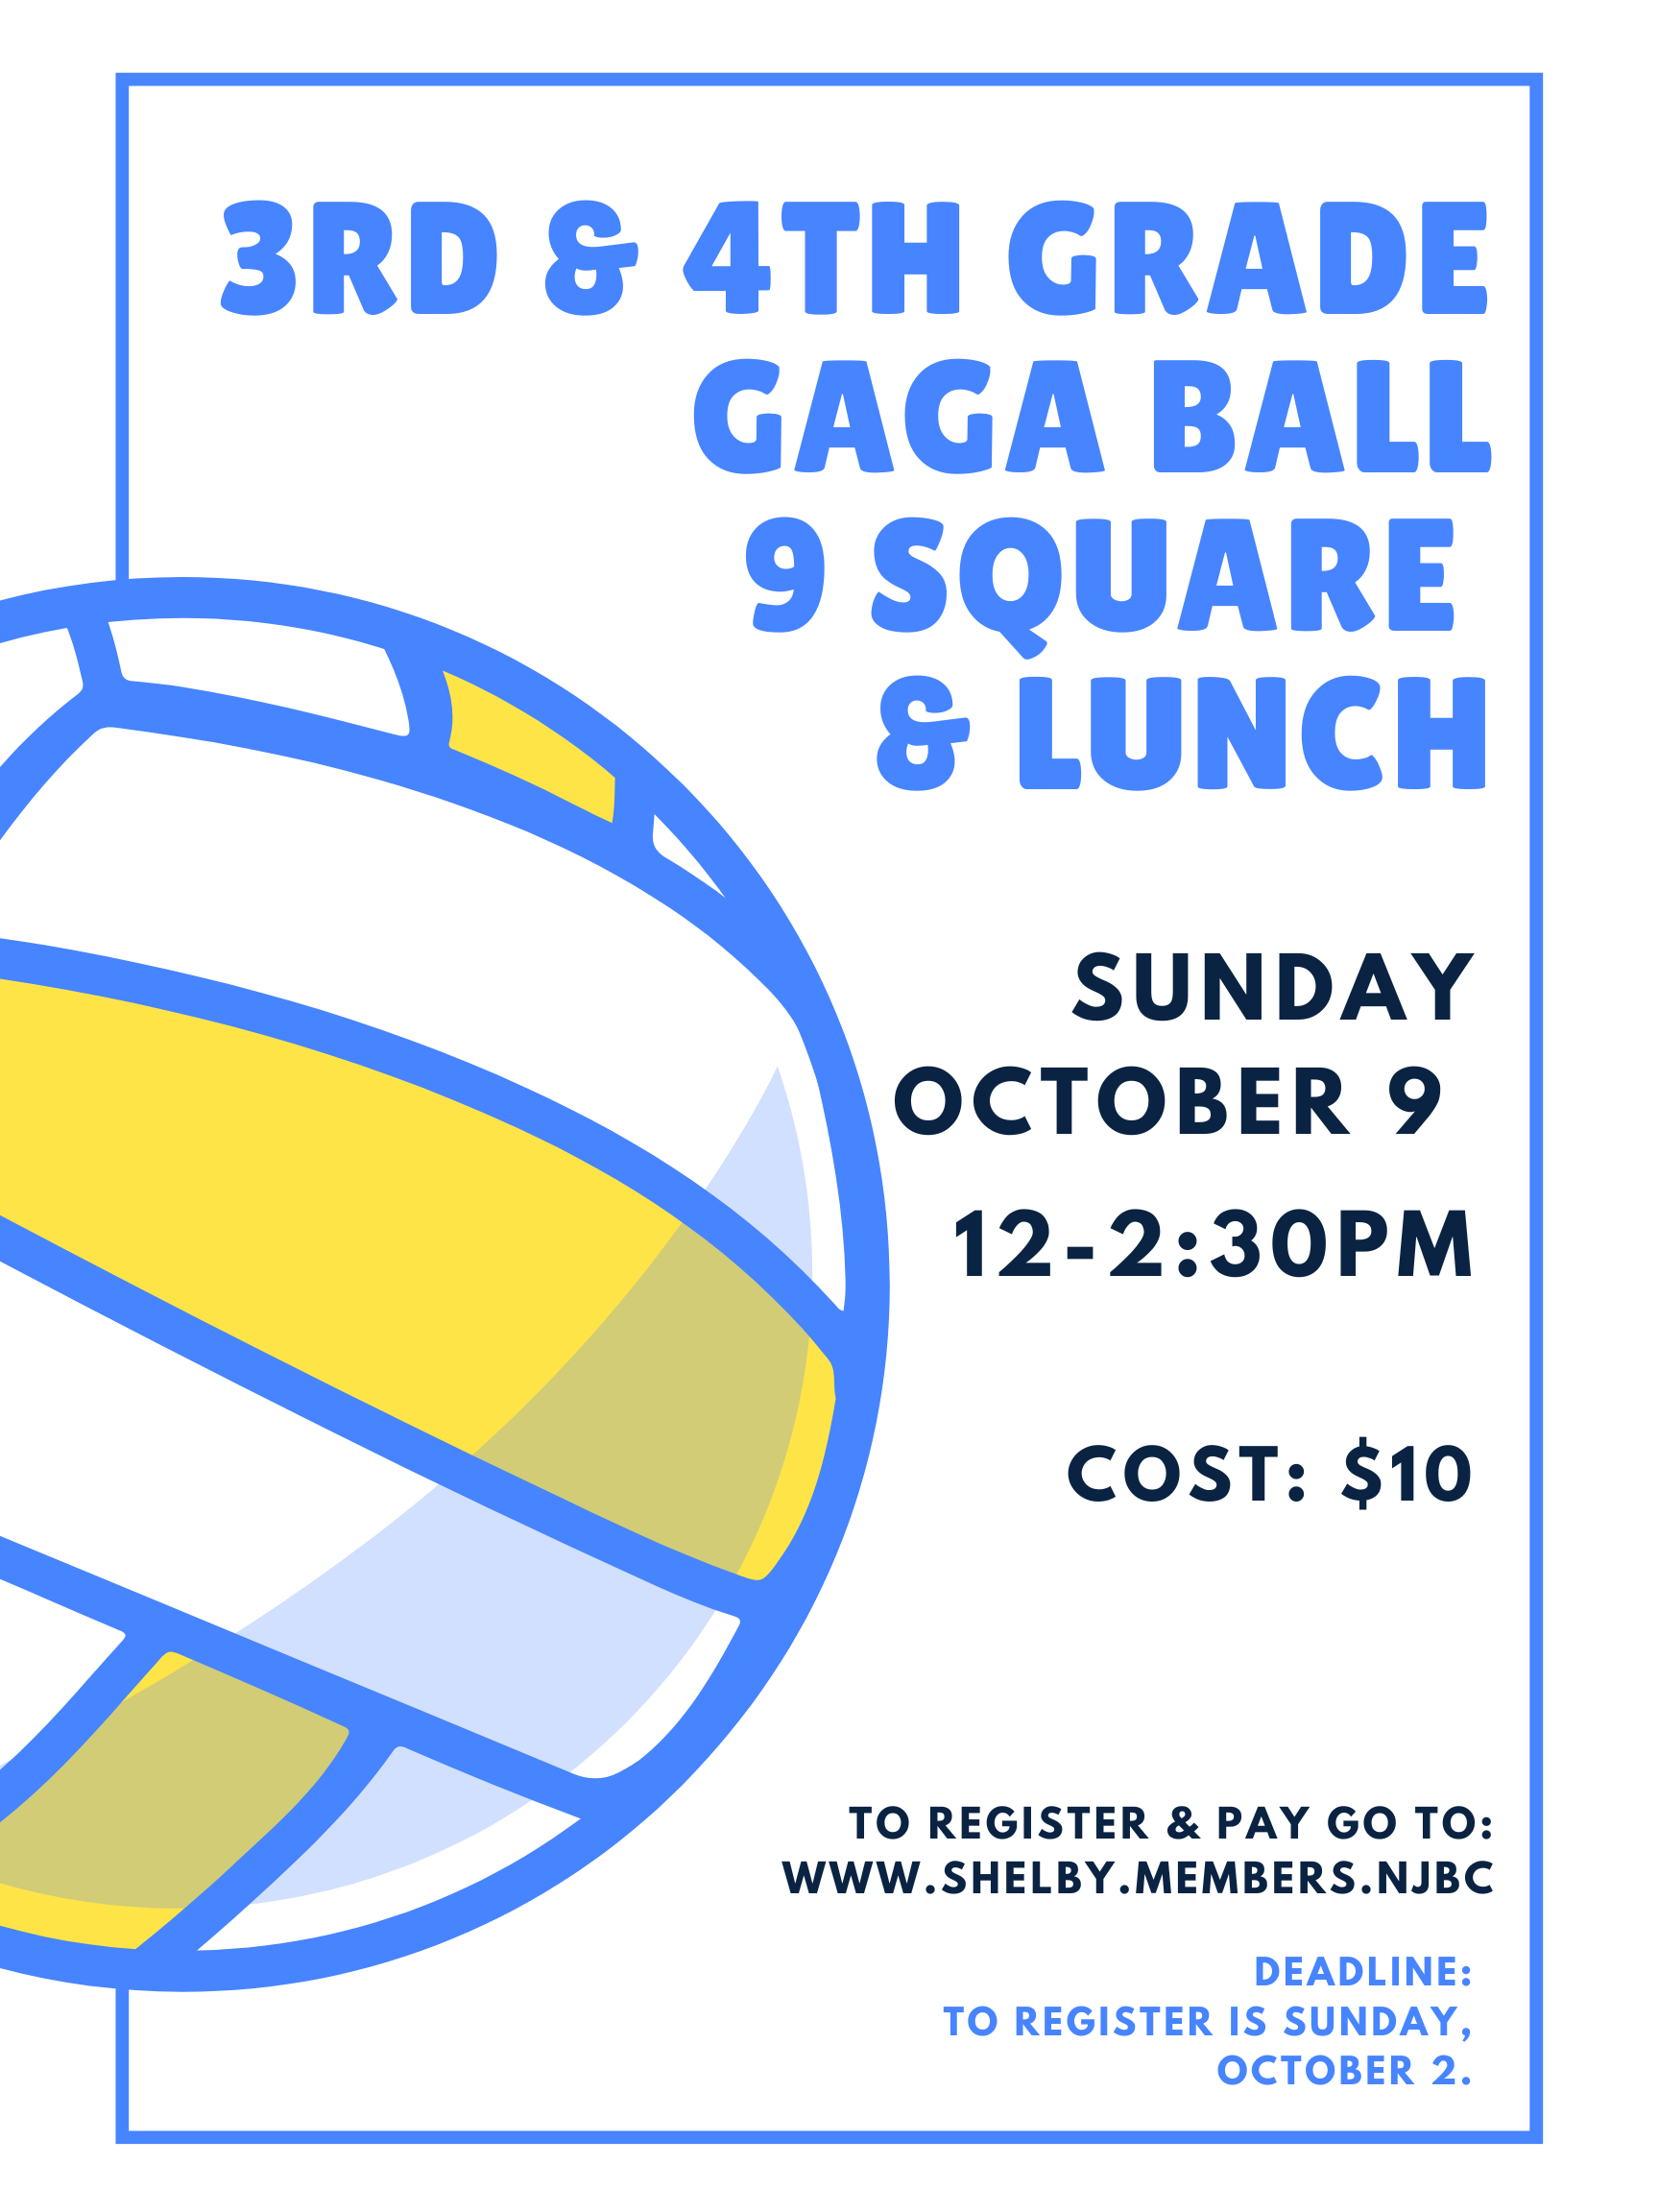 3rd & 4th Grade Gaga Ball, 9 Square & Lunch Oct 9